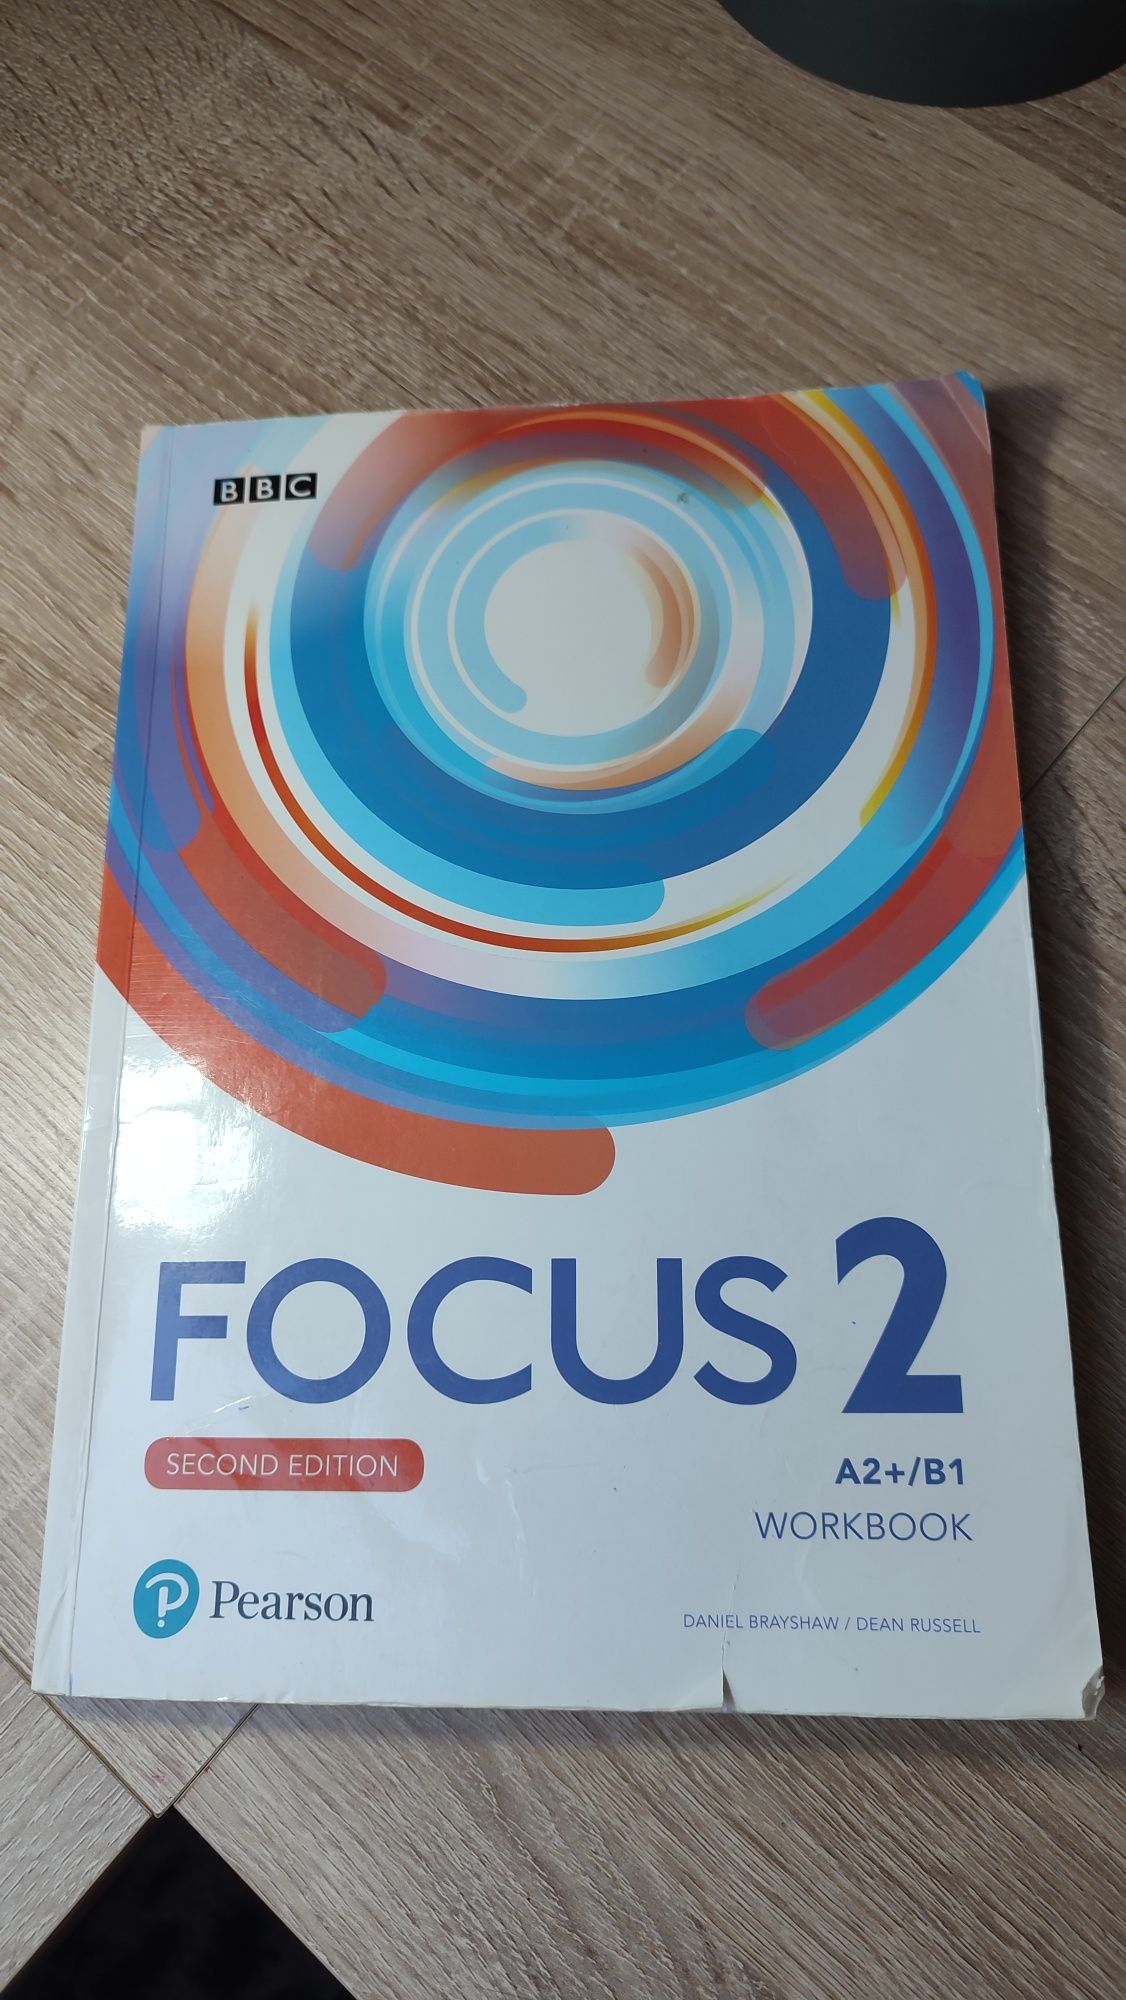 Focus 2 A2+/B1 workbook